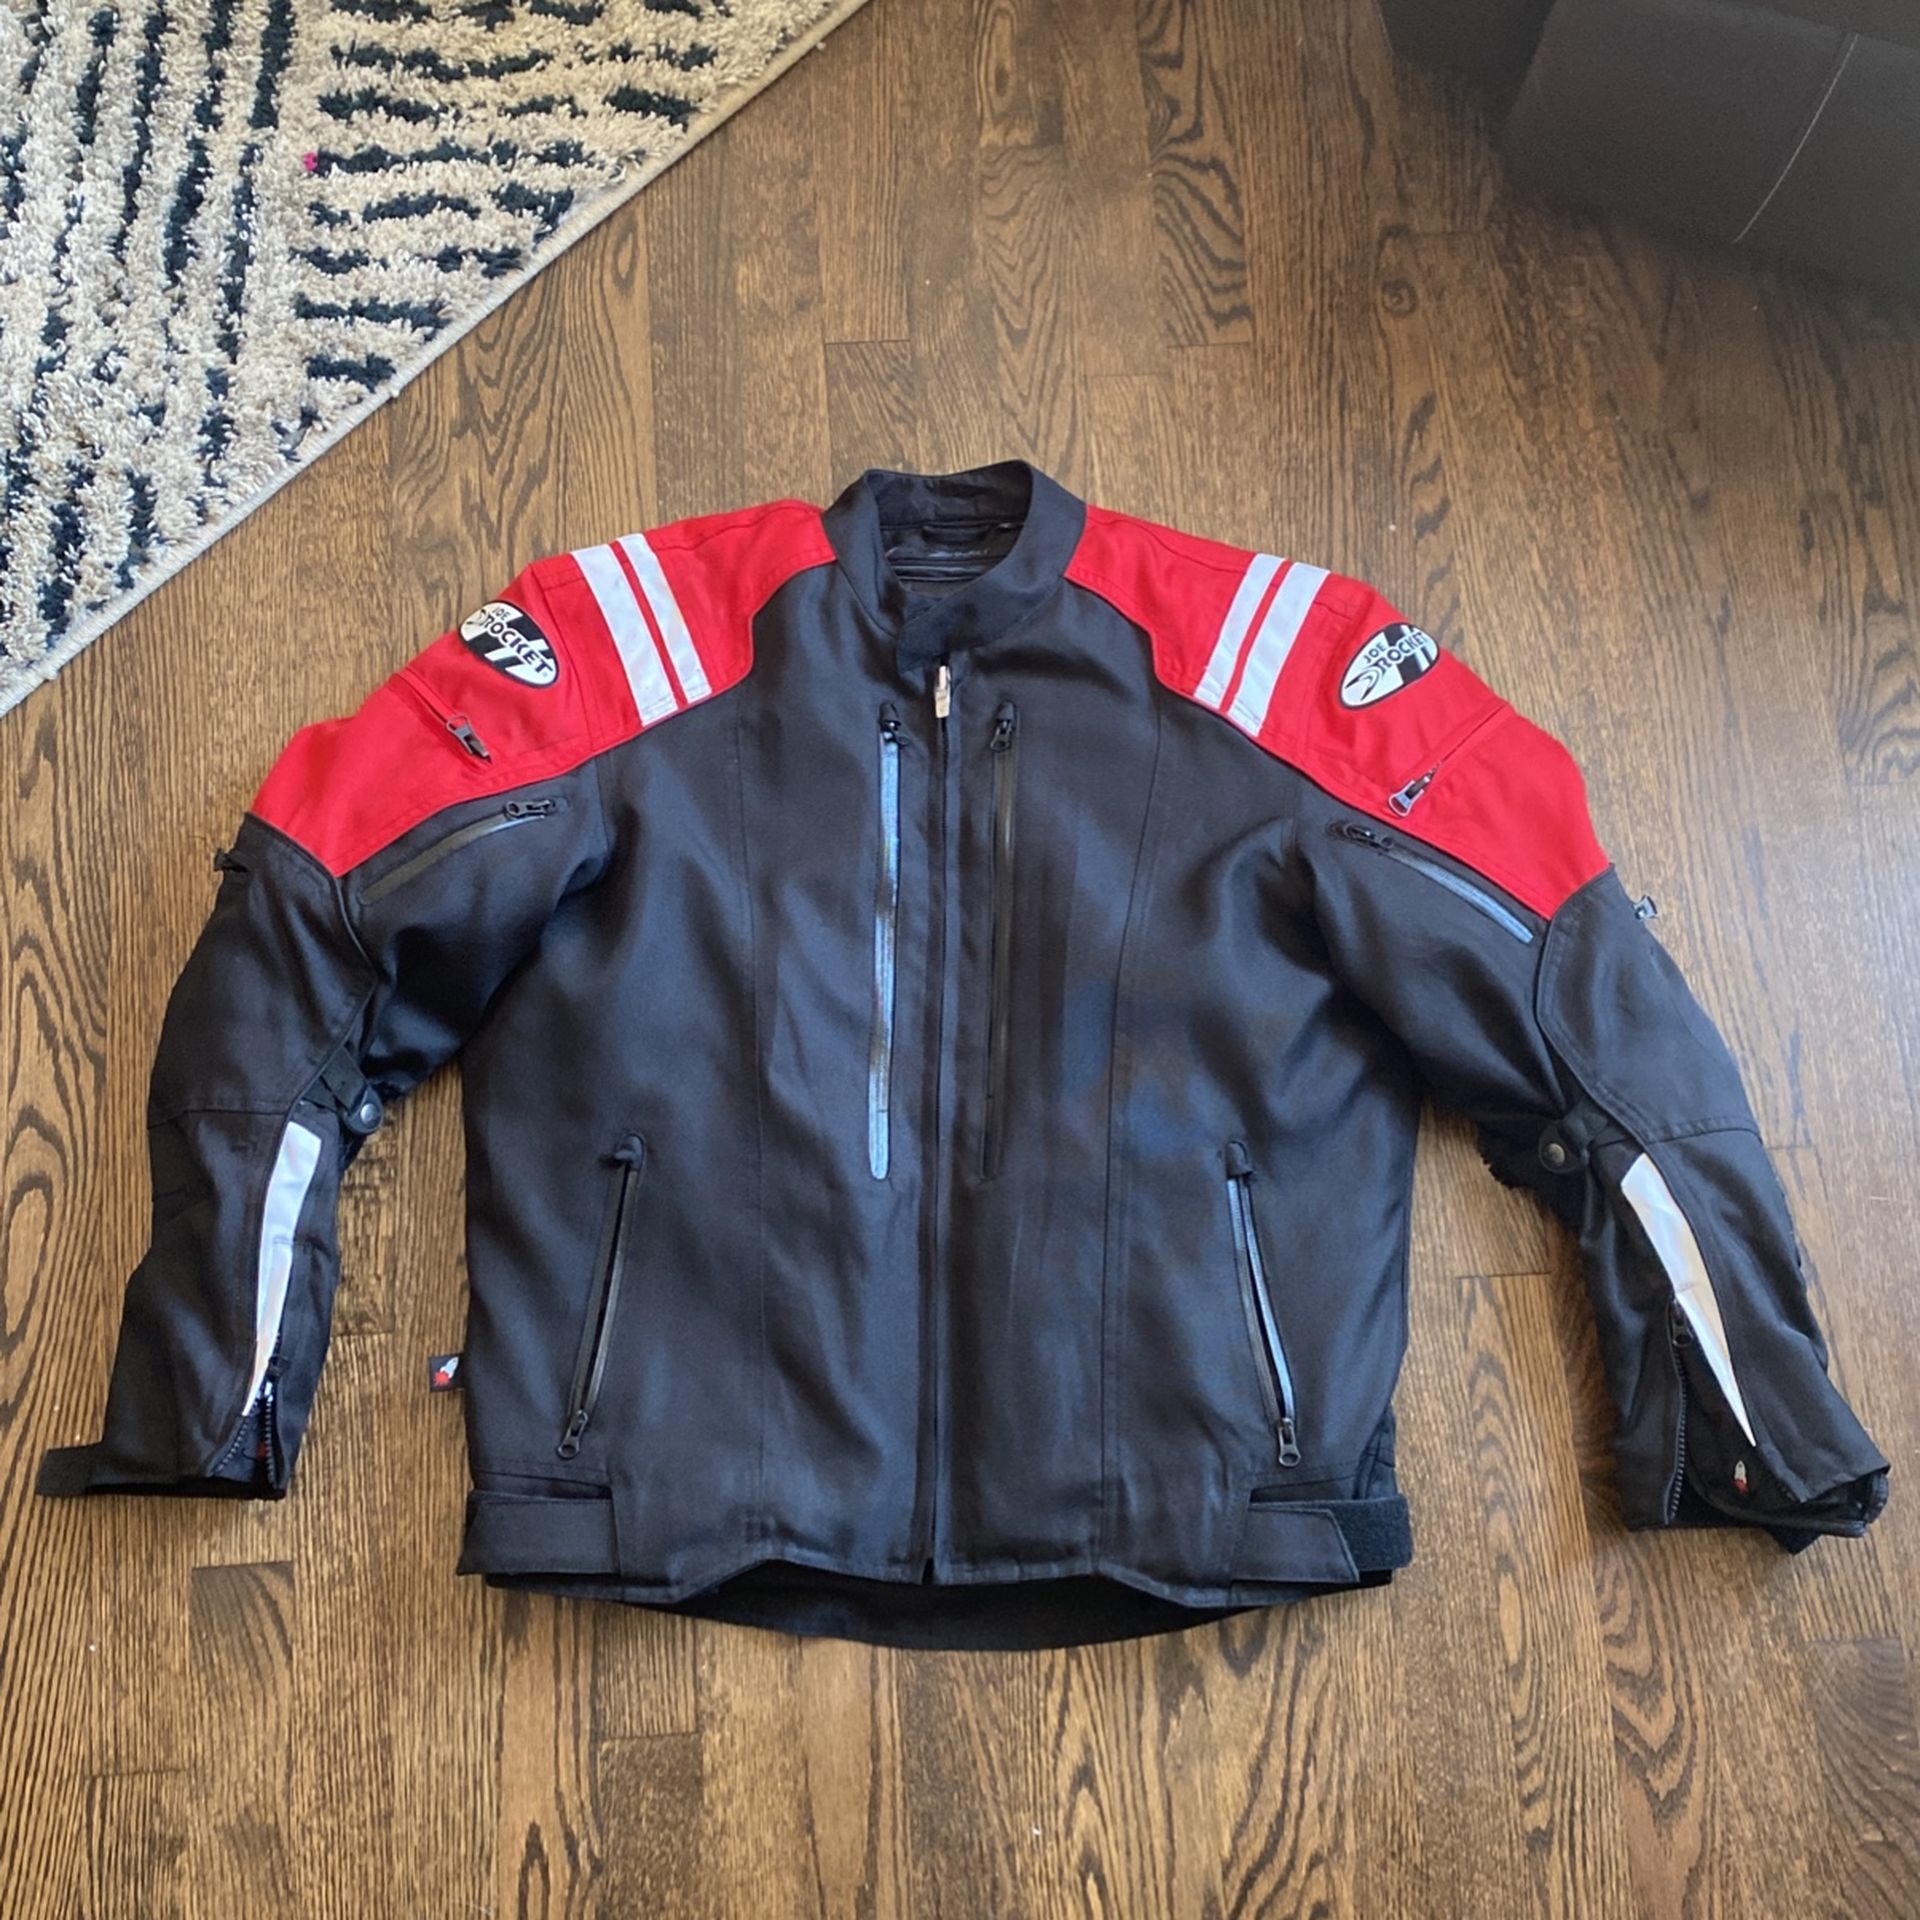 Joe Rocket Motorcycle Jacket (medium)